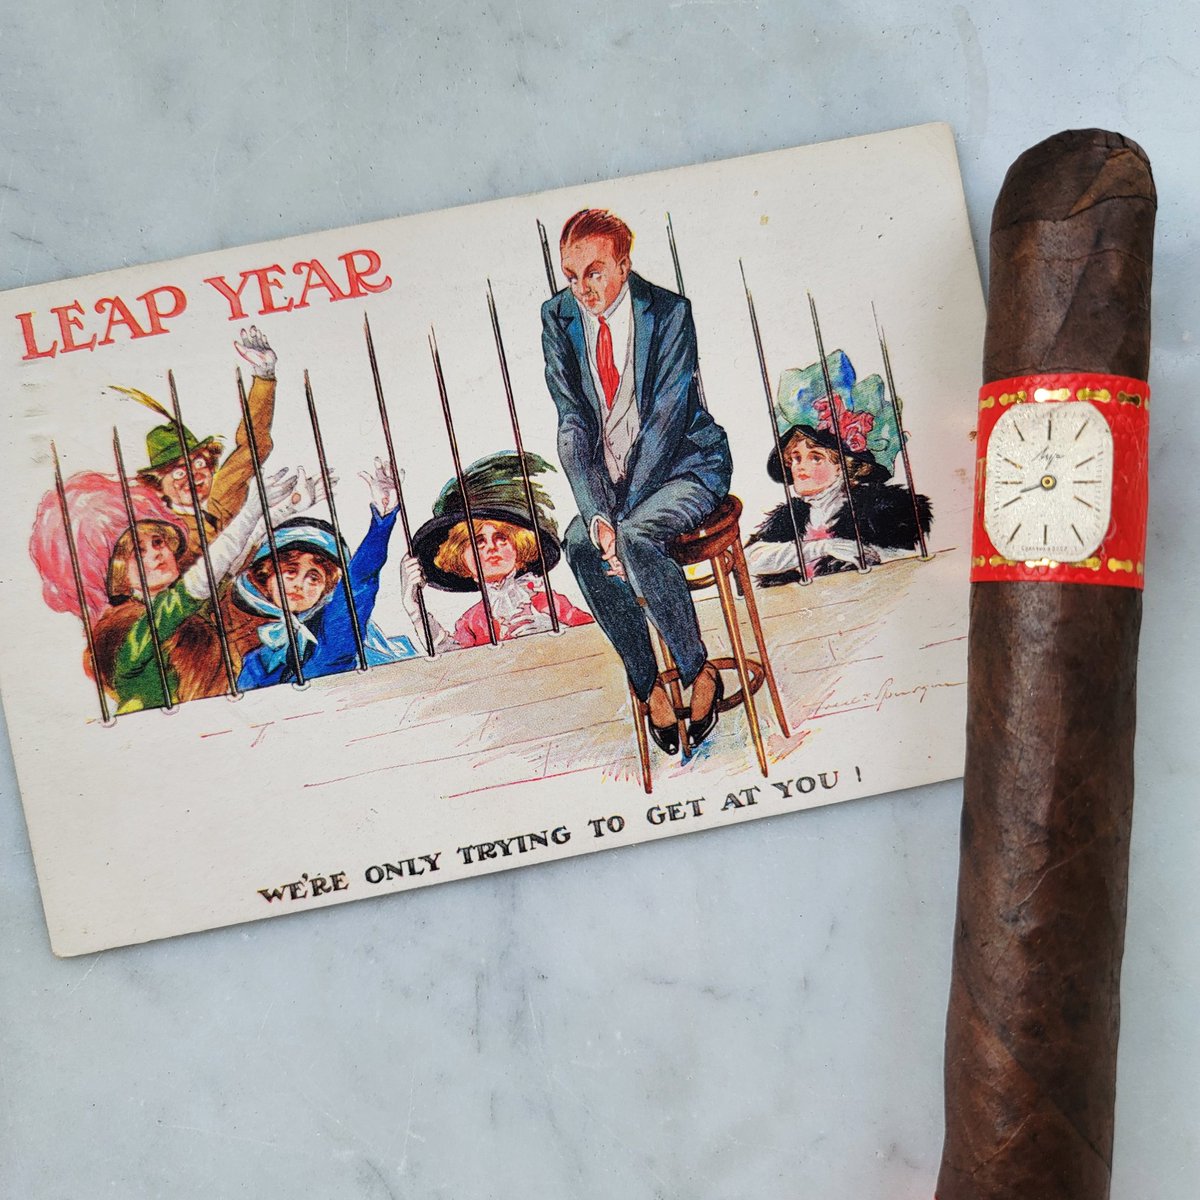 #Cigar #Cigars #PrincipleCigars #LeapYear #LeapYear2024 #VintagePostcard #시가 #雪茄 #цигара #Cerutu #Cigare #Zigarre #葉巻 #сигара #Puro #BOTL #SOTL #CigarAficionado #CigarPorn #Cigarian #CigarWorld #CigarOfTheDay #CigarStyle #CigarLover #ArchiveCollection #TimeToBurn #Maduro